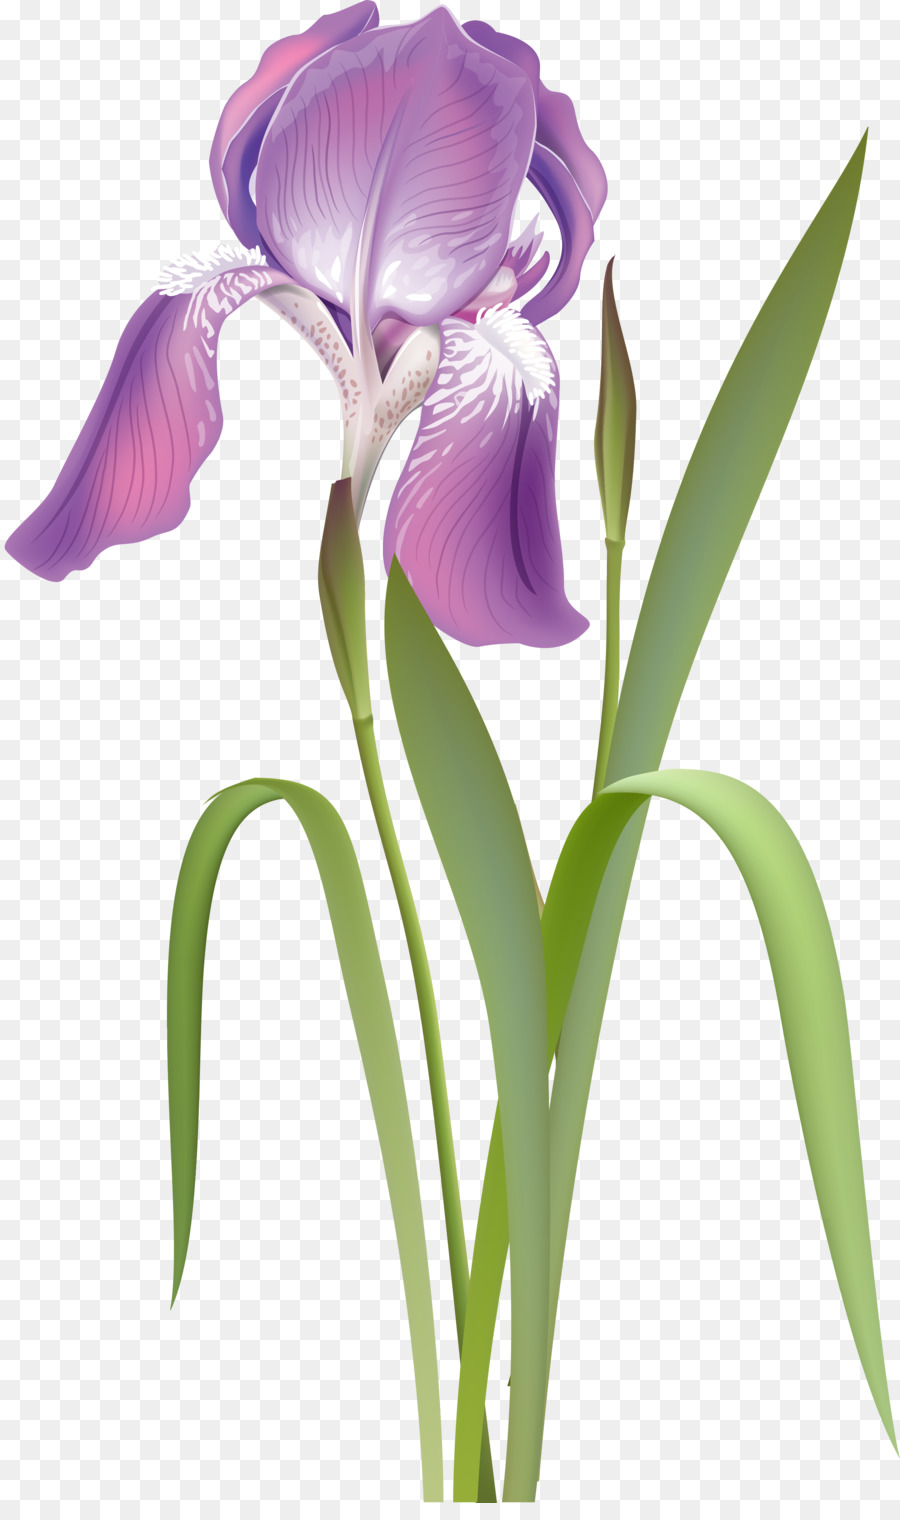 Iris Flower PNG HD - 138973